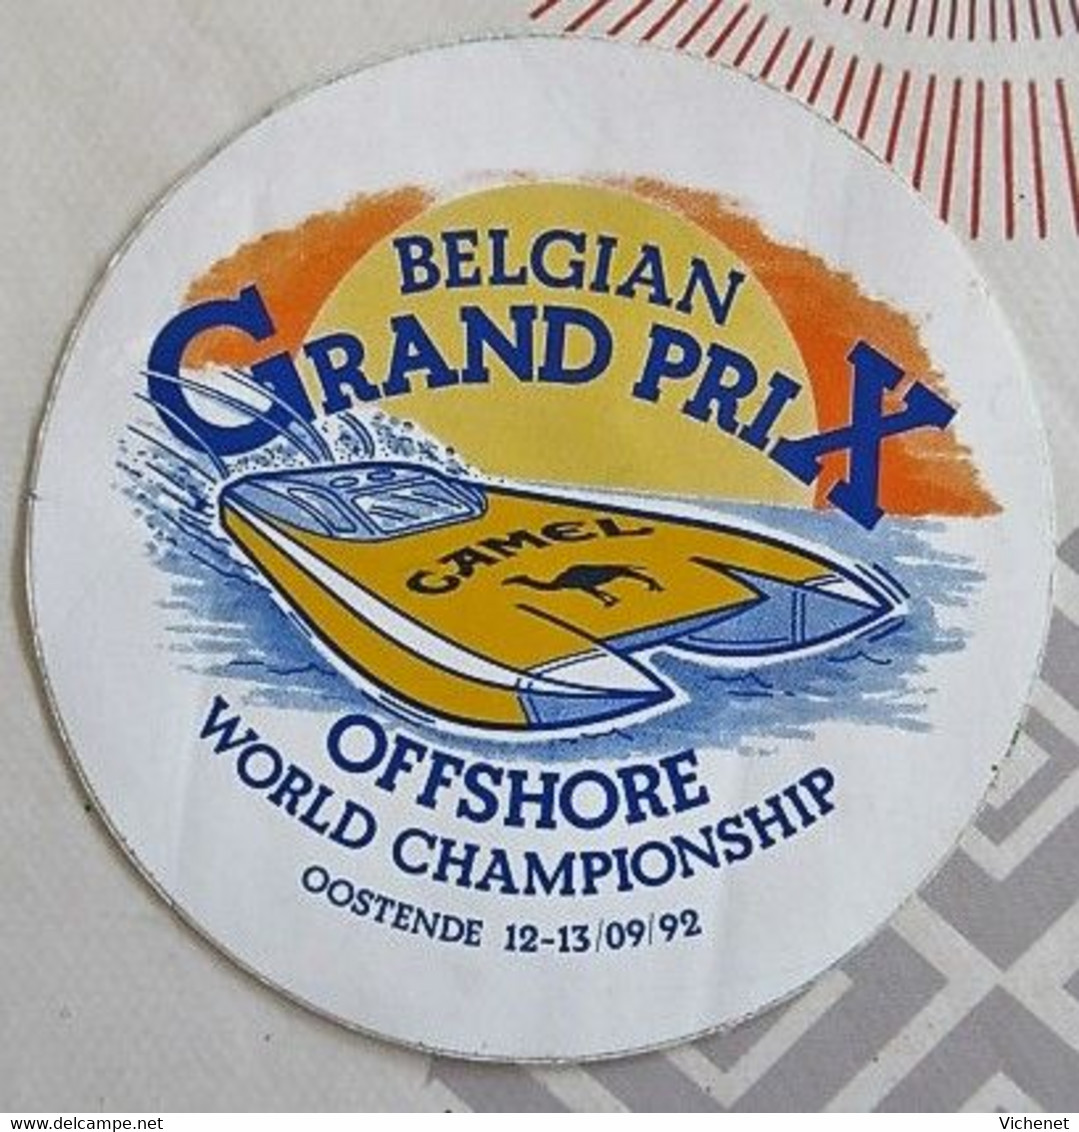 CAMEL - Belgium Grand Prix - Offshore World Championship - Oostende 12-13 / 09 / 92 - Objets Publicitaires